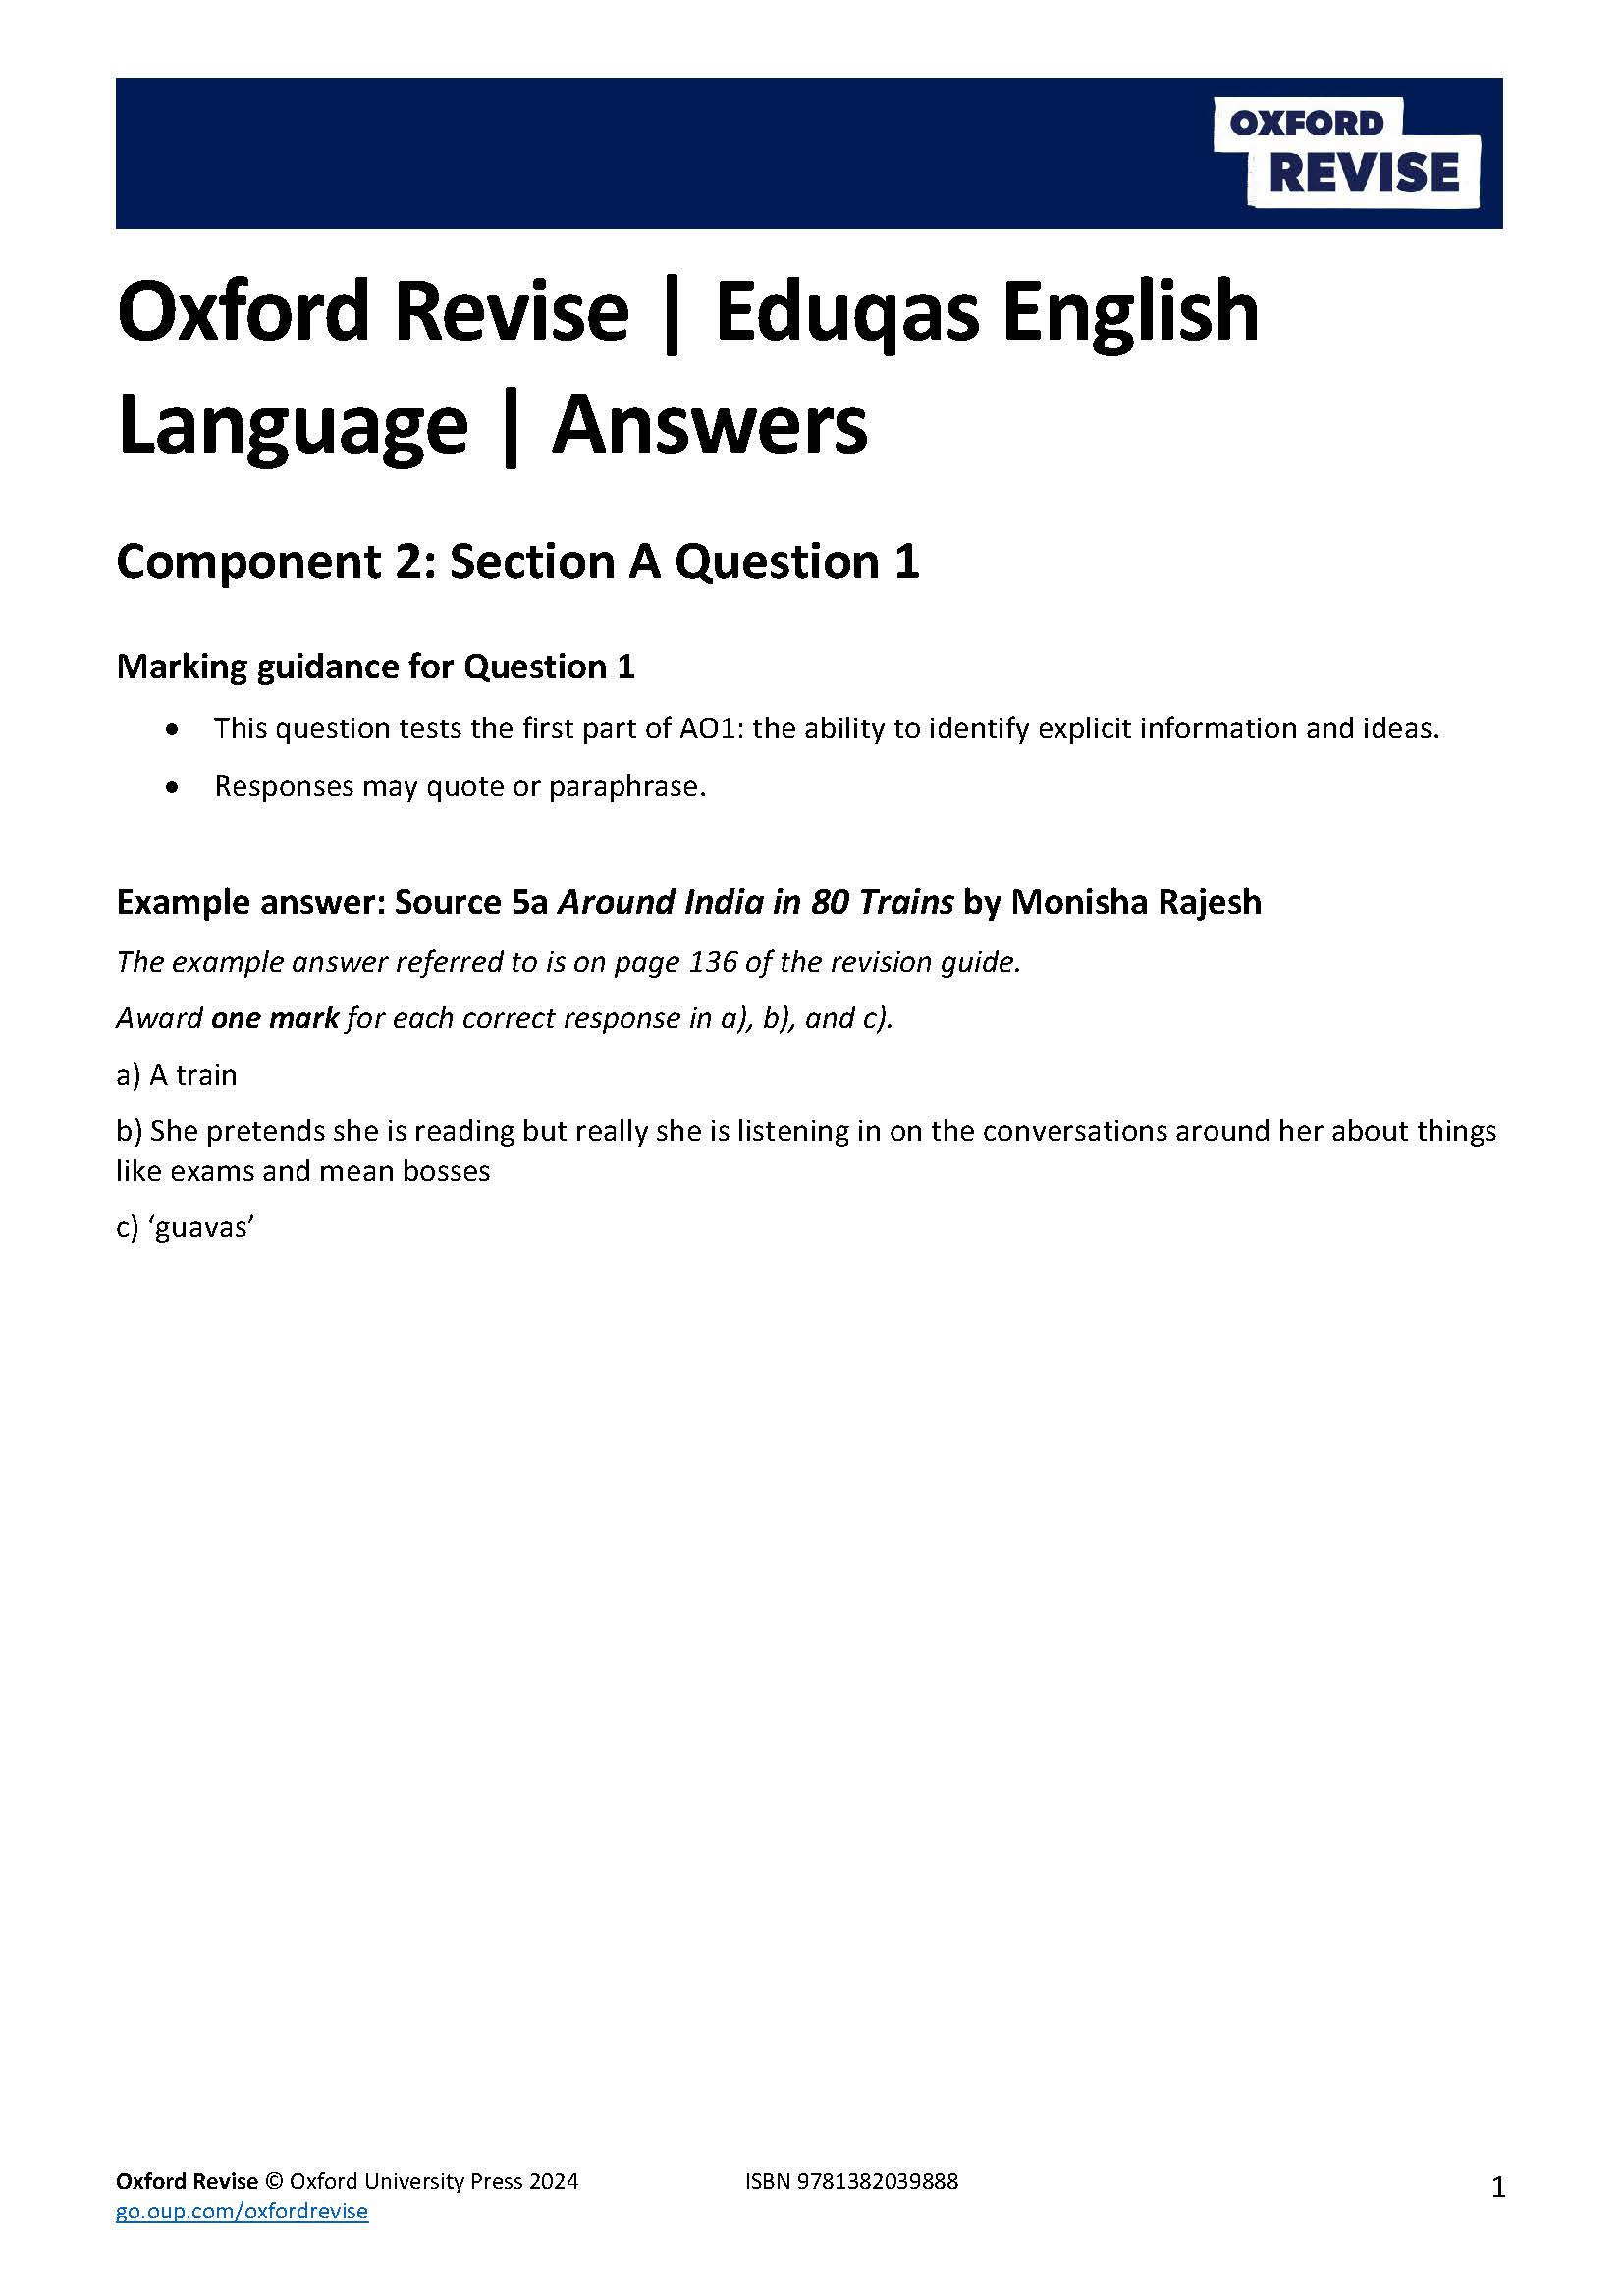 Oxford Revise Eduqas GCSE English Language Component 2 Answers